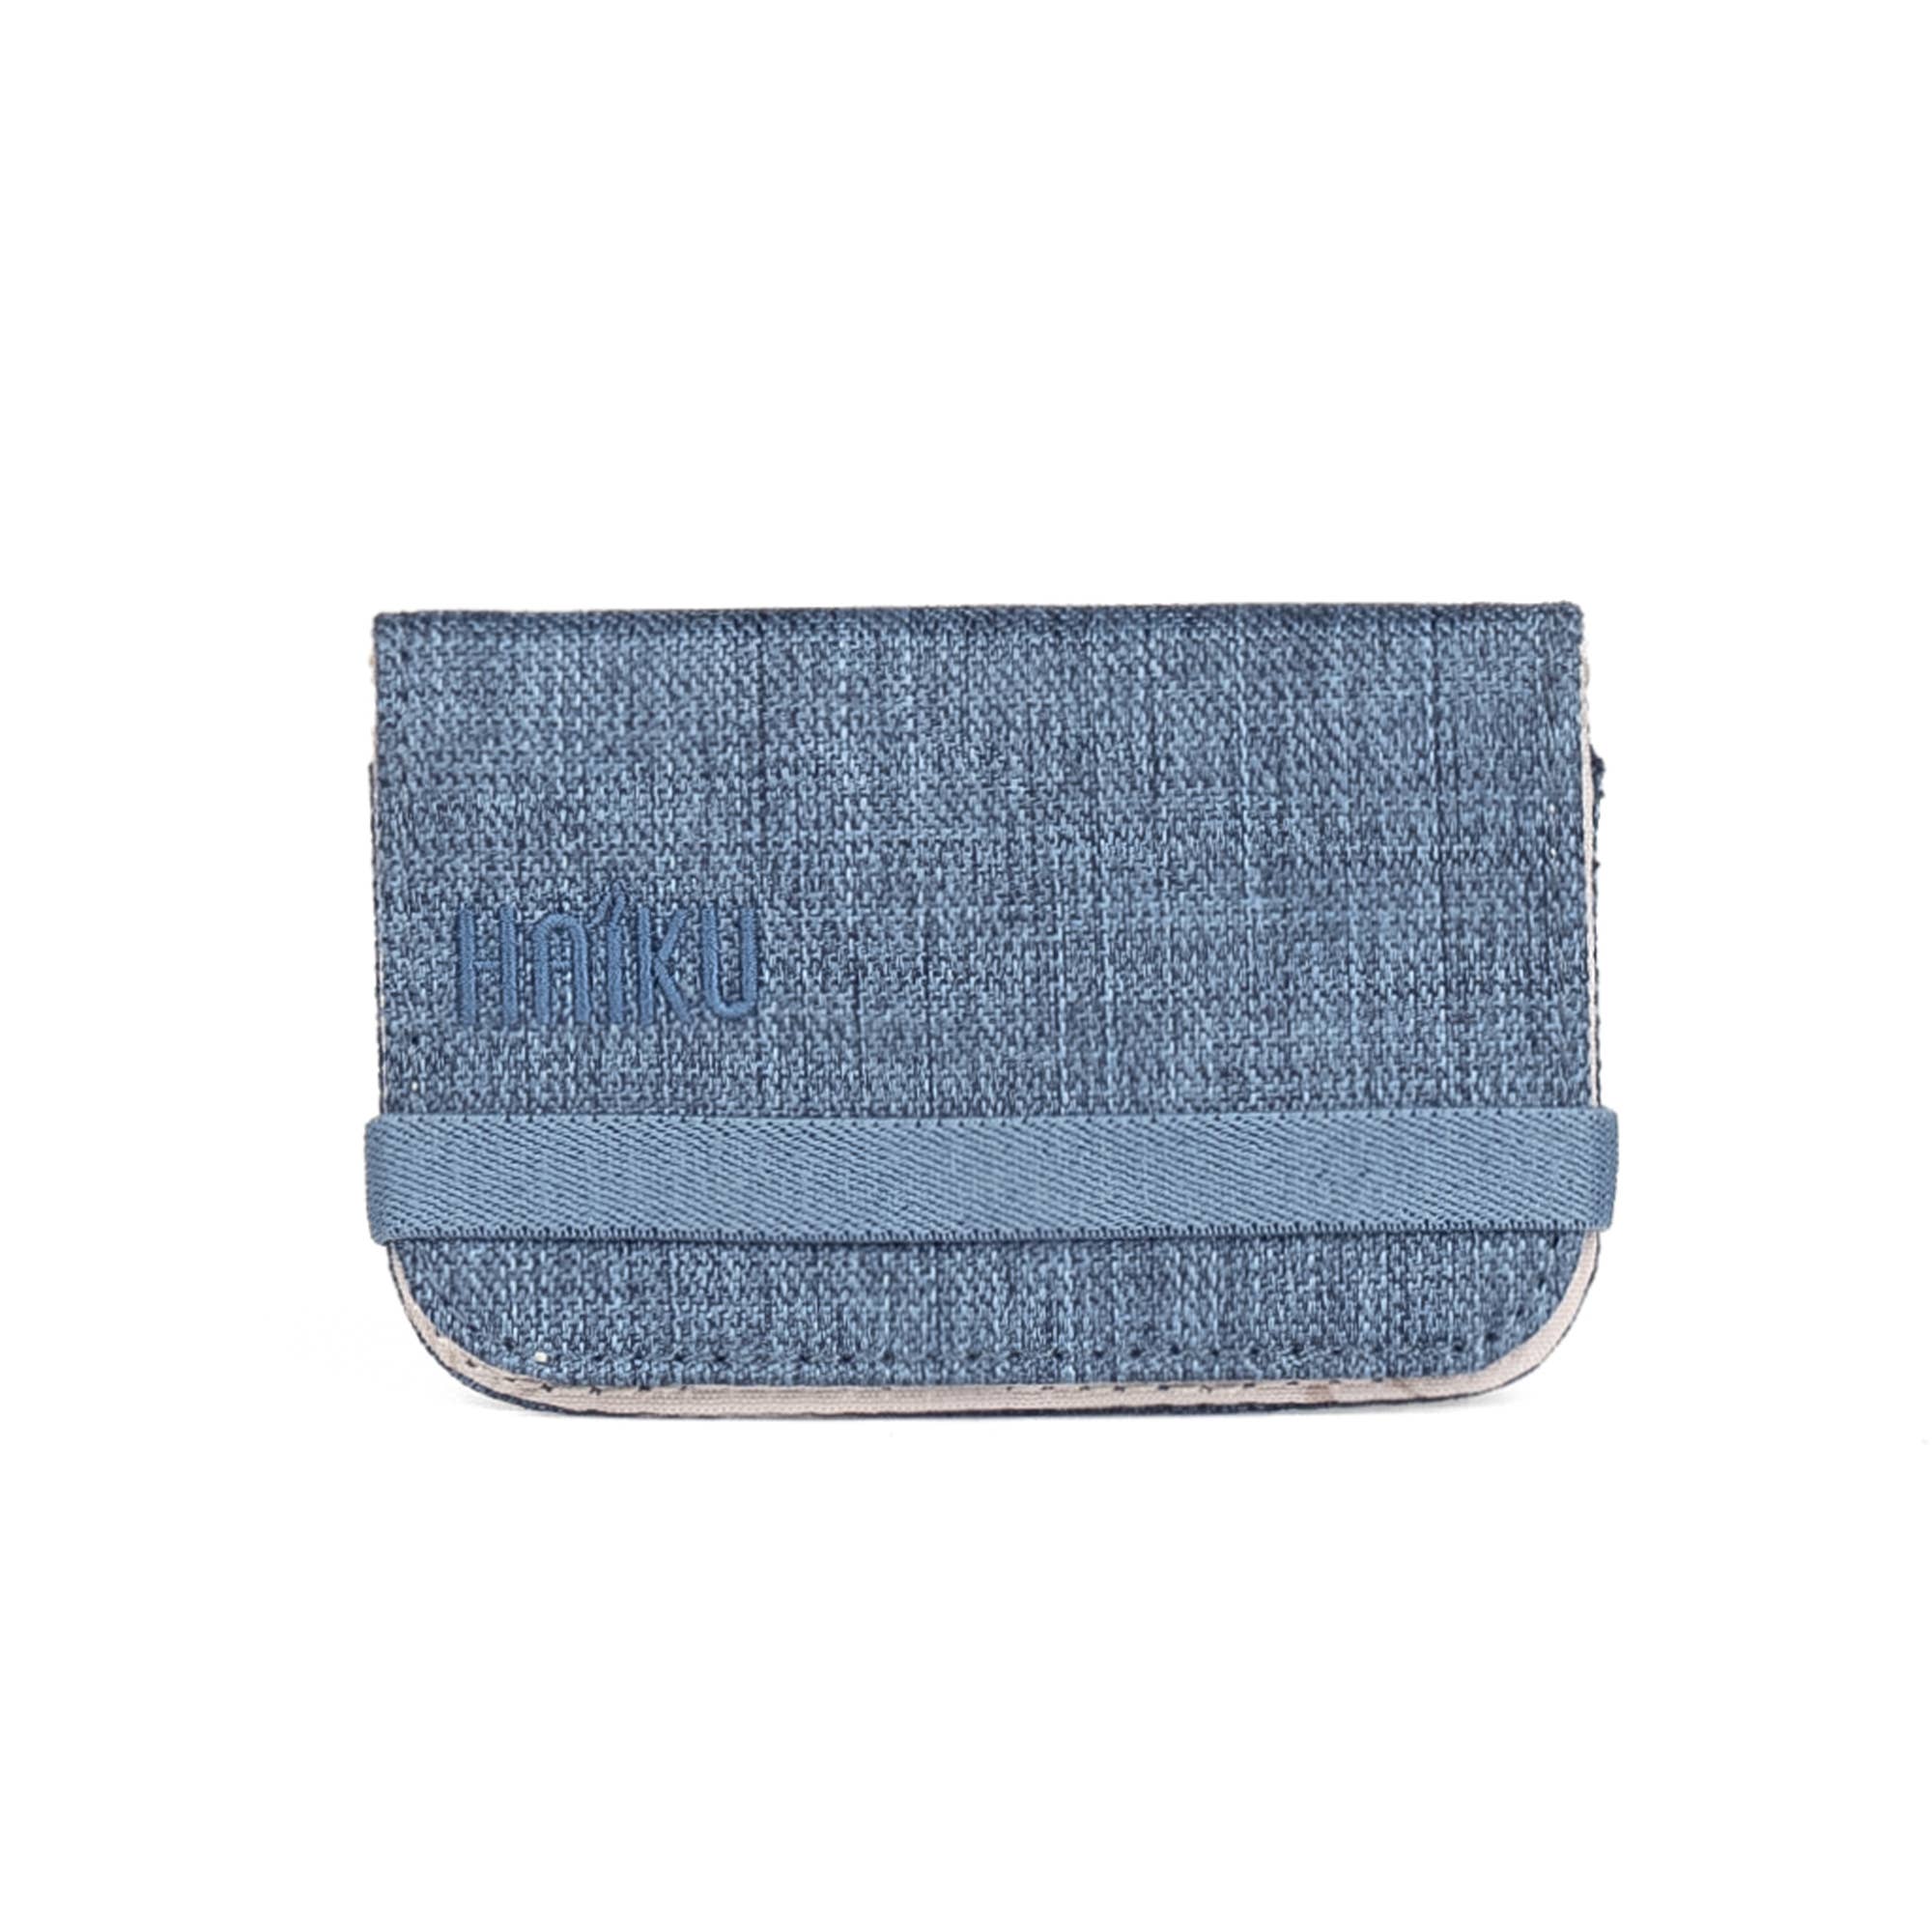 RFID Mini Wallet 2.0: River Rock Blue